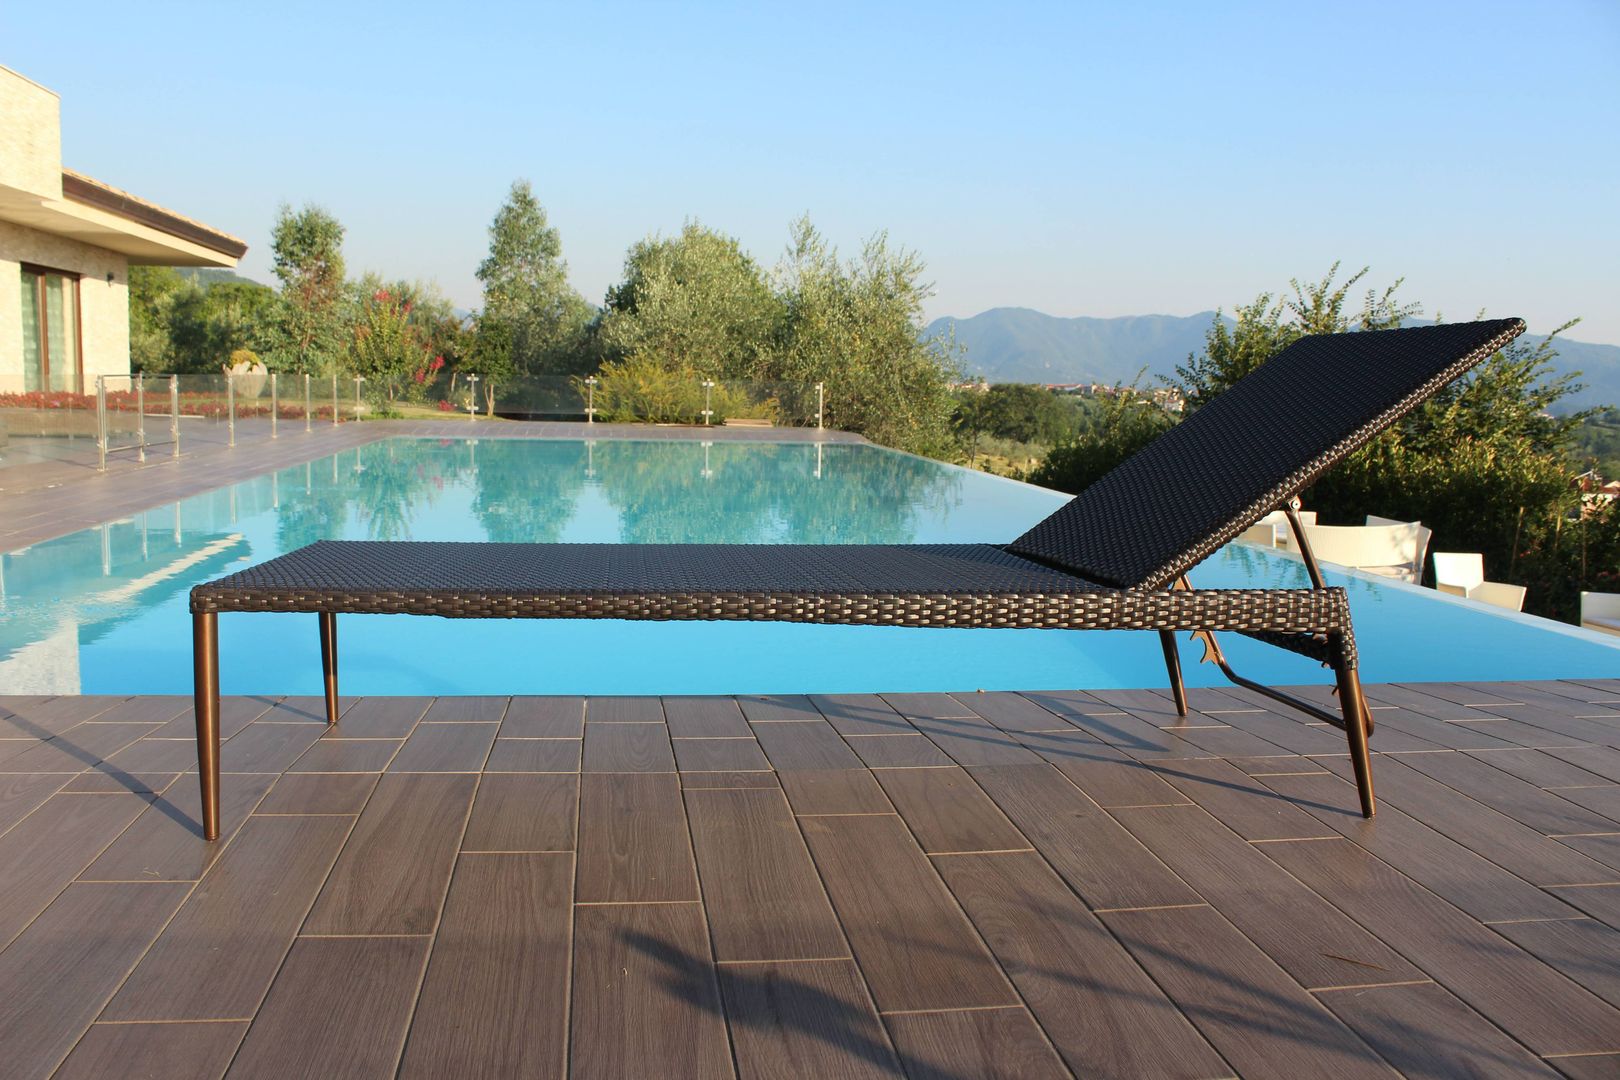 Stile a bordo piscina, Uniko Uniko Hồ bơi phong cách Địa Trung Hải Pool